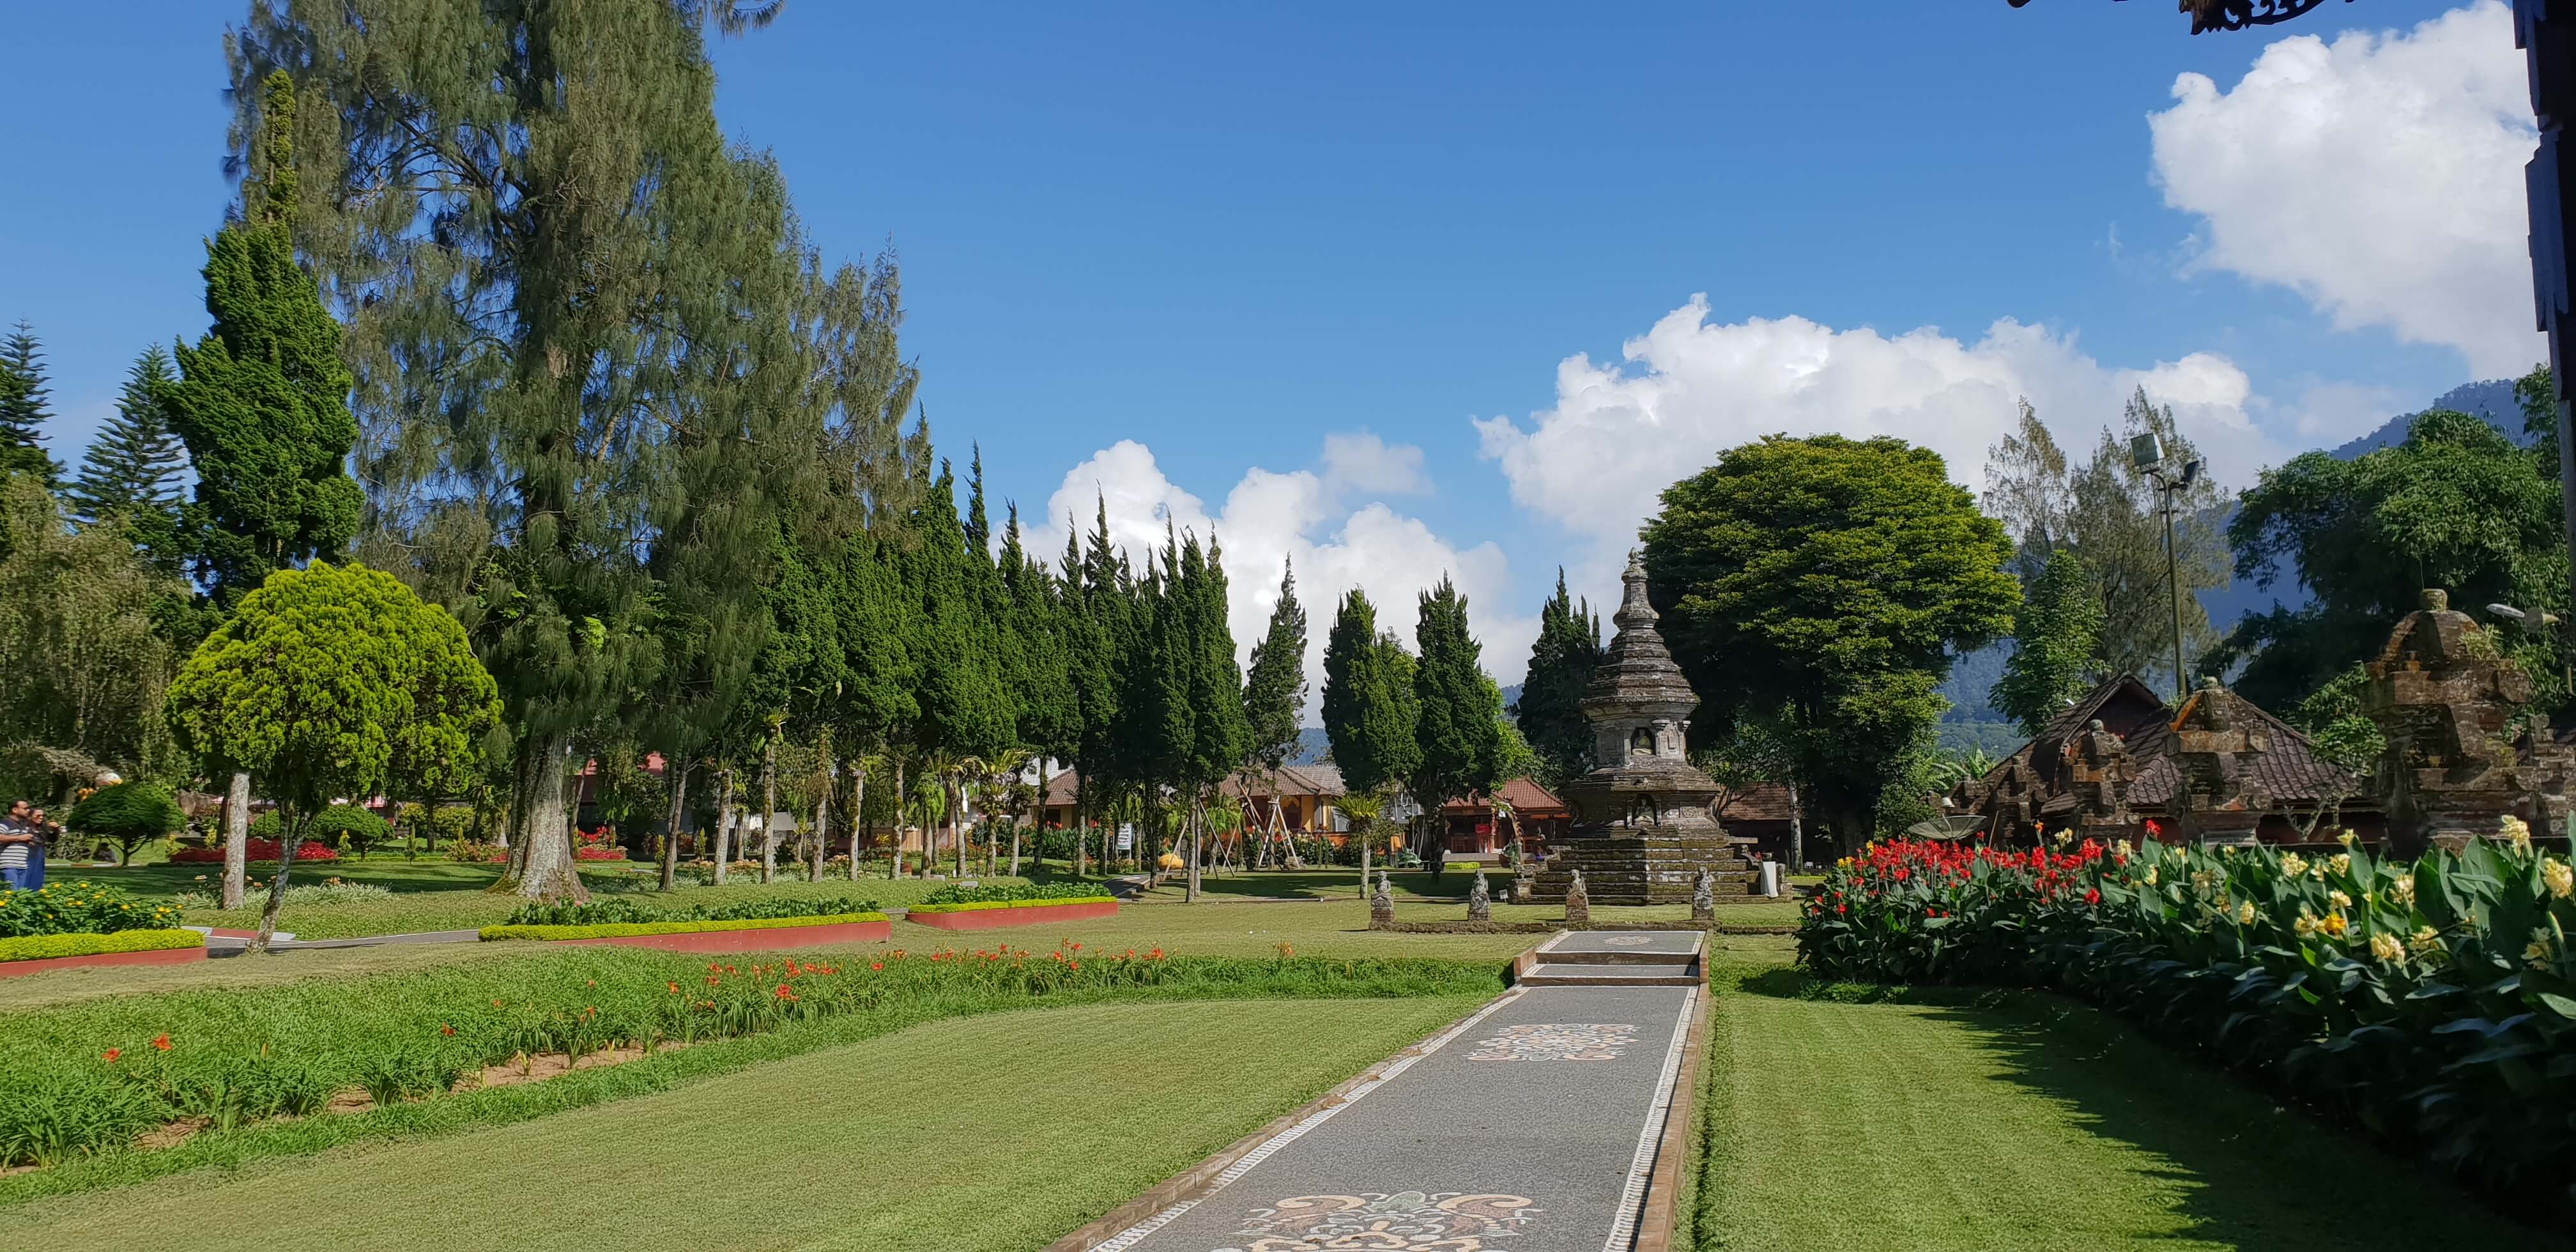 Lush green gardens leading to the Ulun Danu Beratan temple give it a scenic appeal